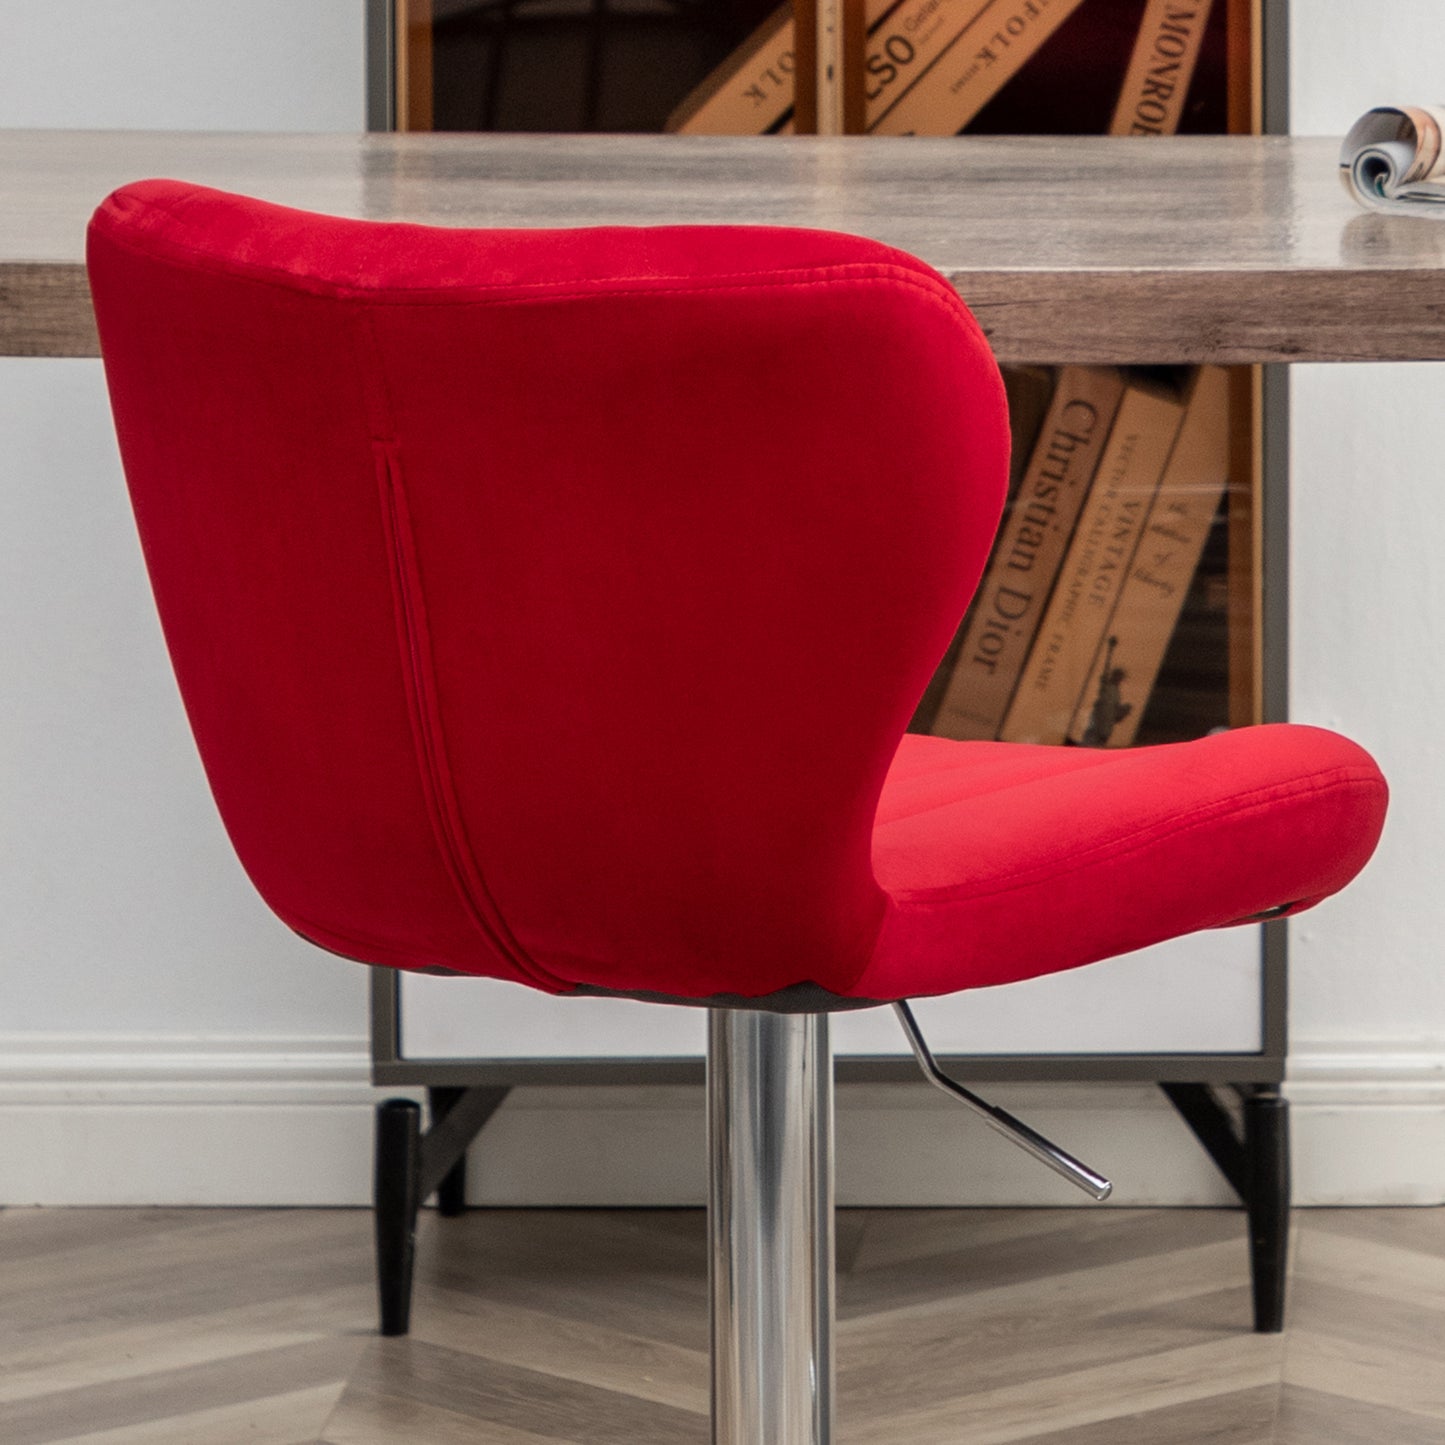 Ellston Upholstered Adjustable Swivel Barstools in Red, Set of 2